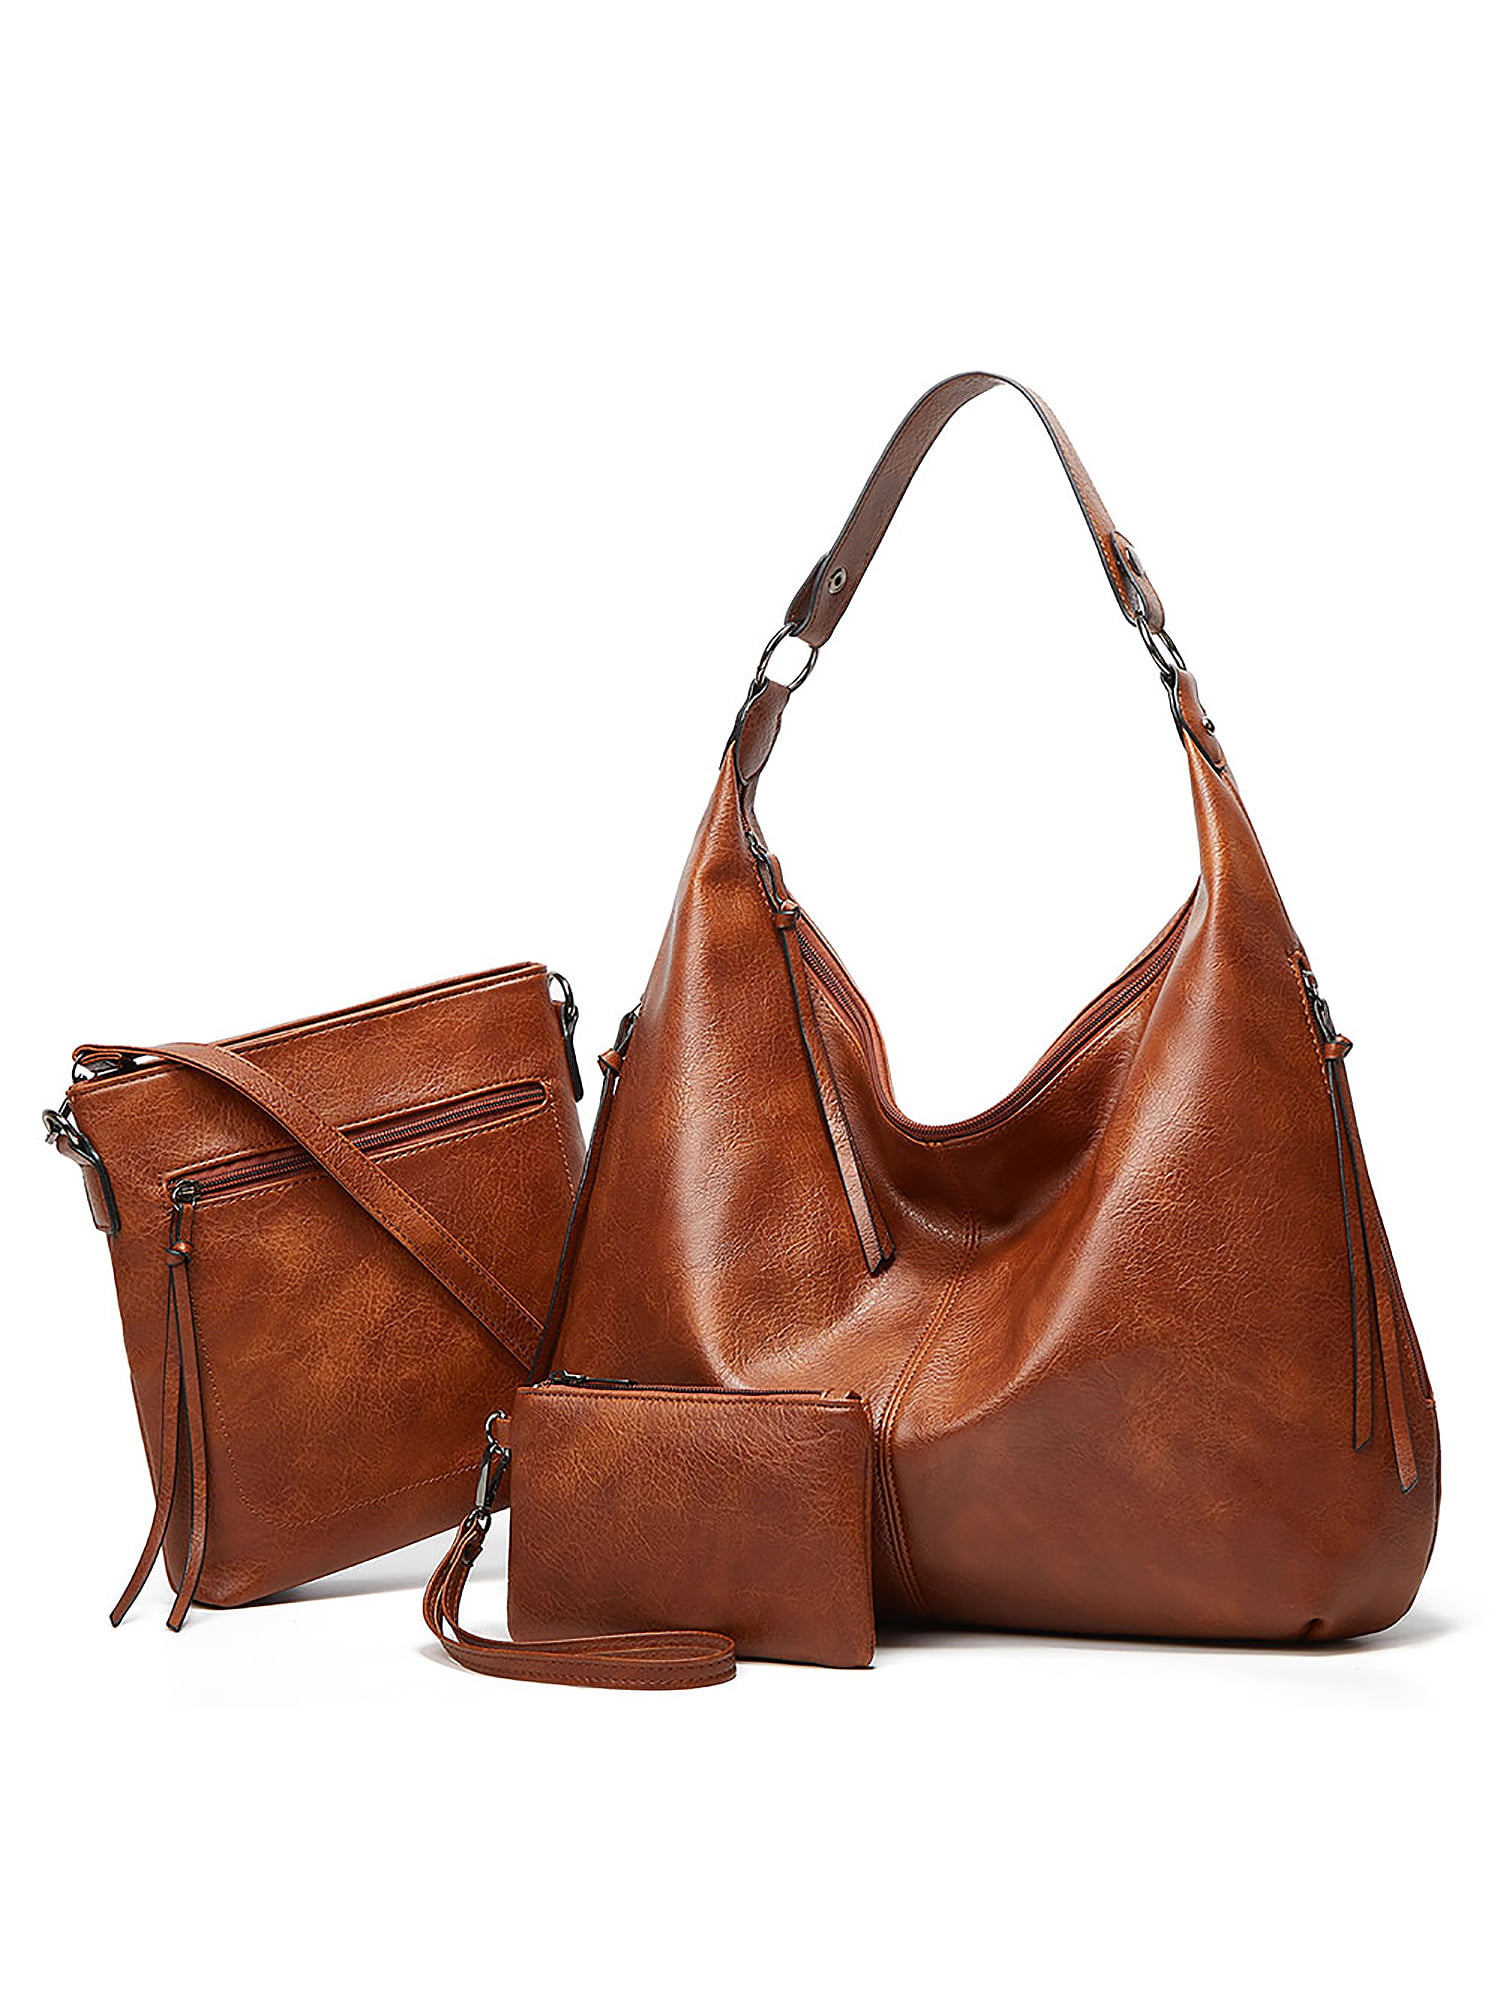 Women Handbag Leather Satchel Shoulder Bag Hobo Tote Messenger Crossbody Purse 